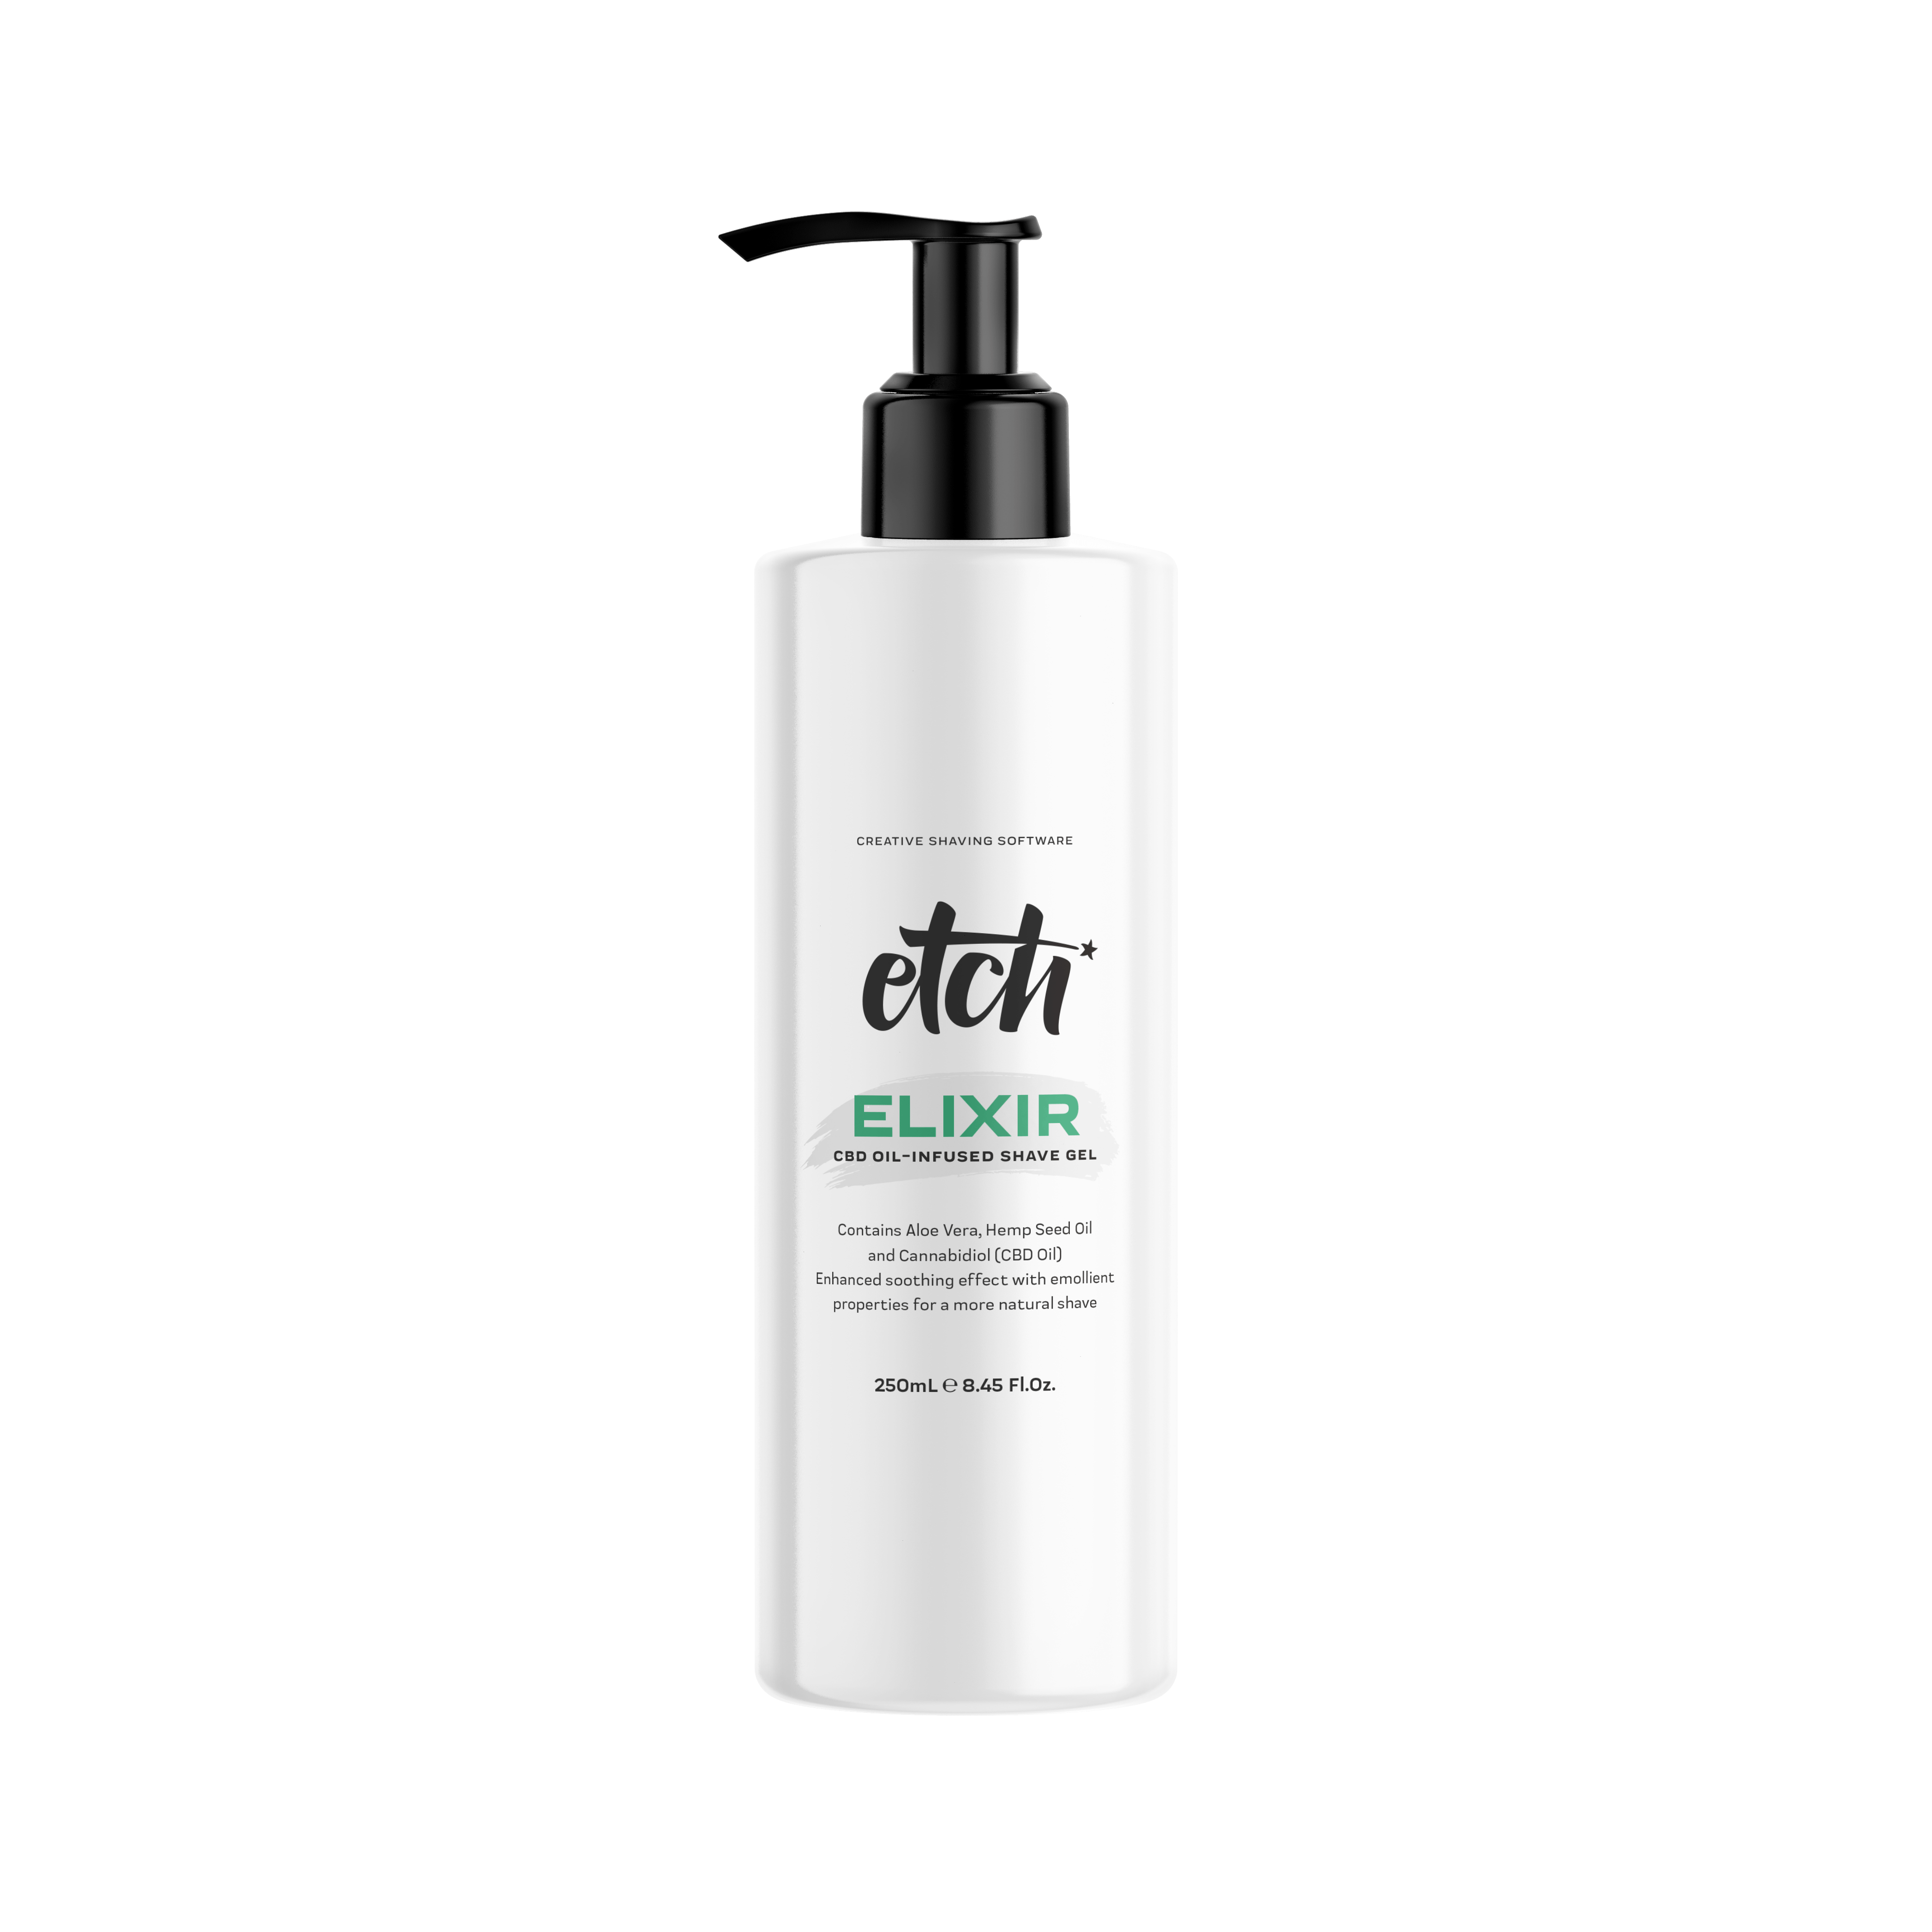 Etch Elixir CDB Oil-Infused Shave Gel